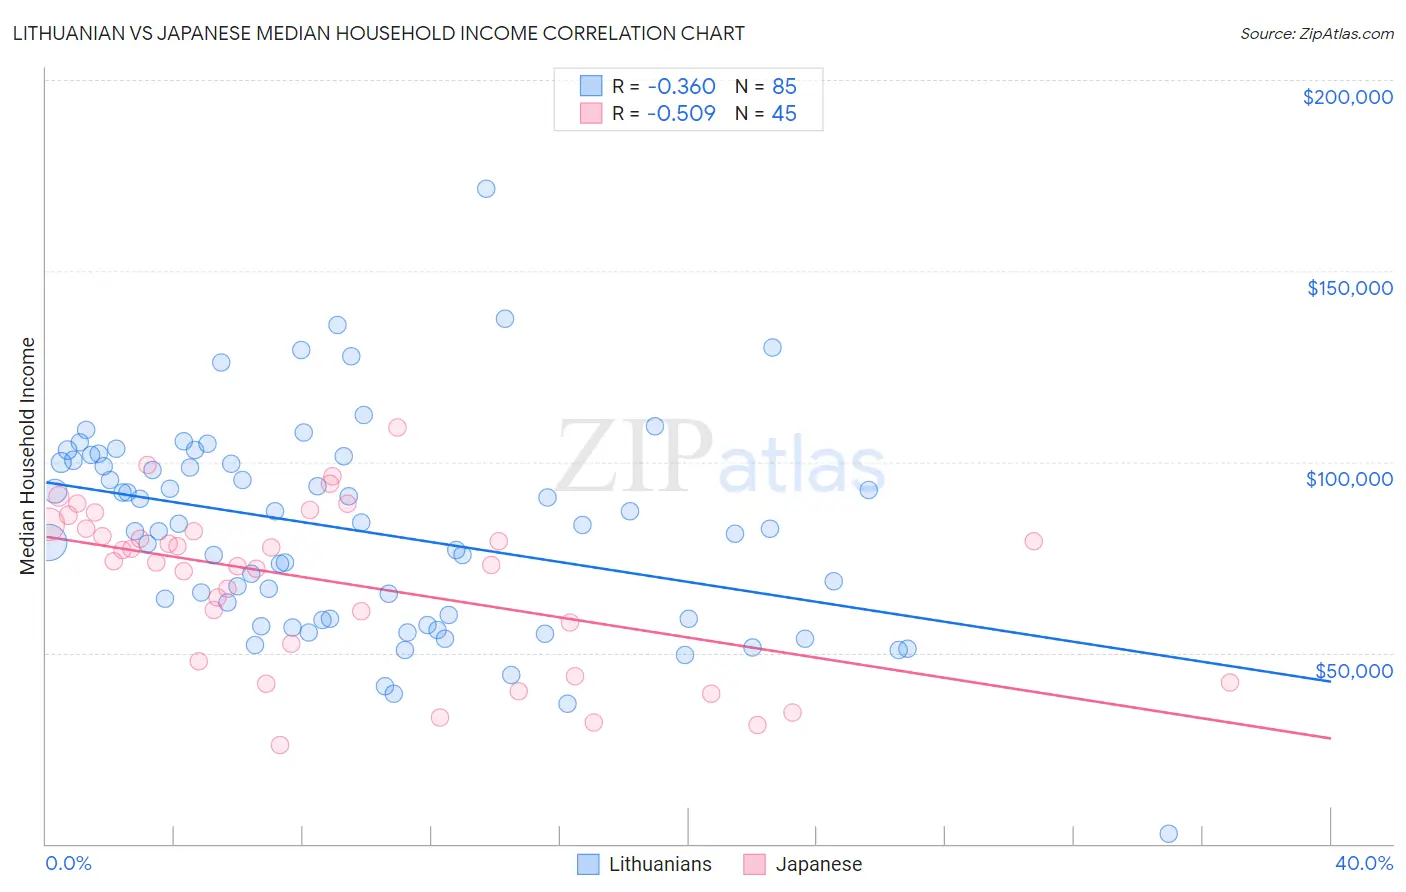 Lithuanian vs Japanese Median Household Income